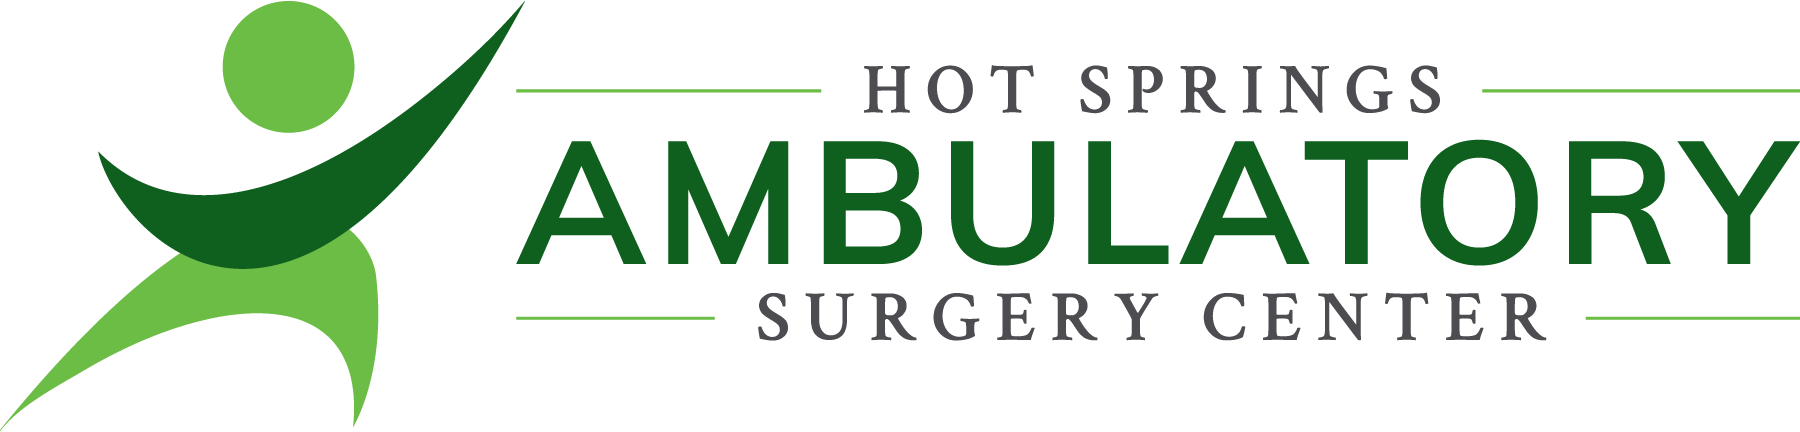 Hot Springs Ambulatory Surgery Center Logo